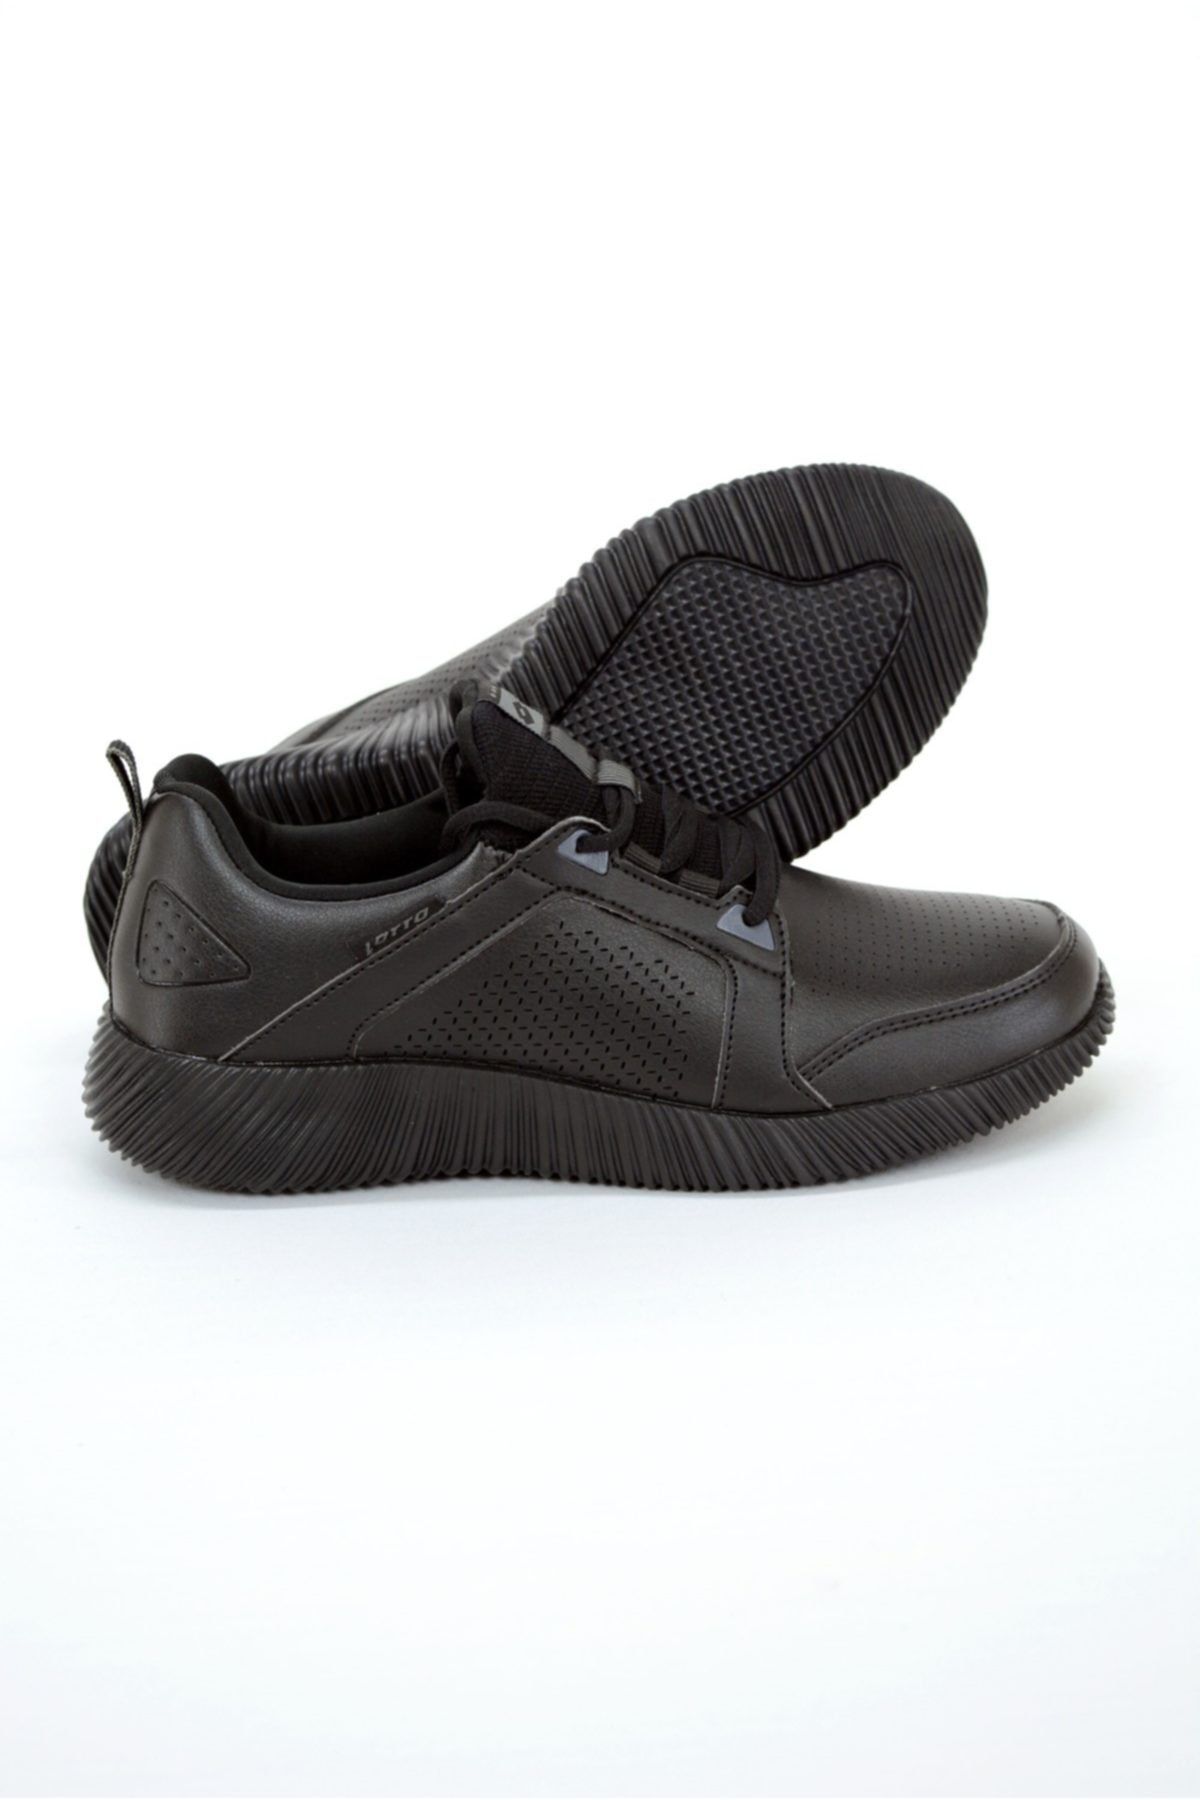 Lotto Unisex Siyah Sneaker Günlük Giyim Warren W T0514